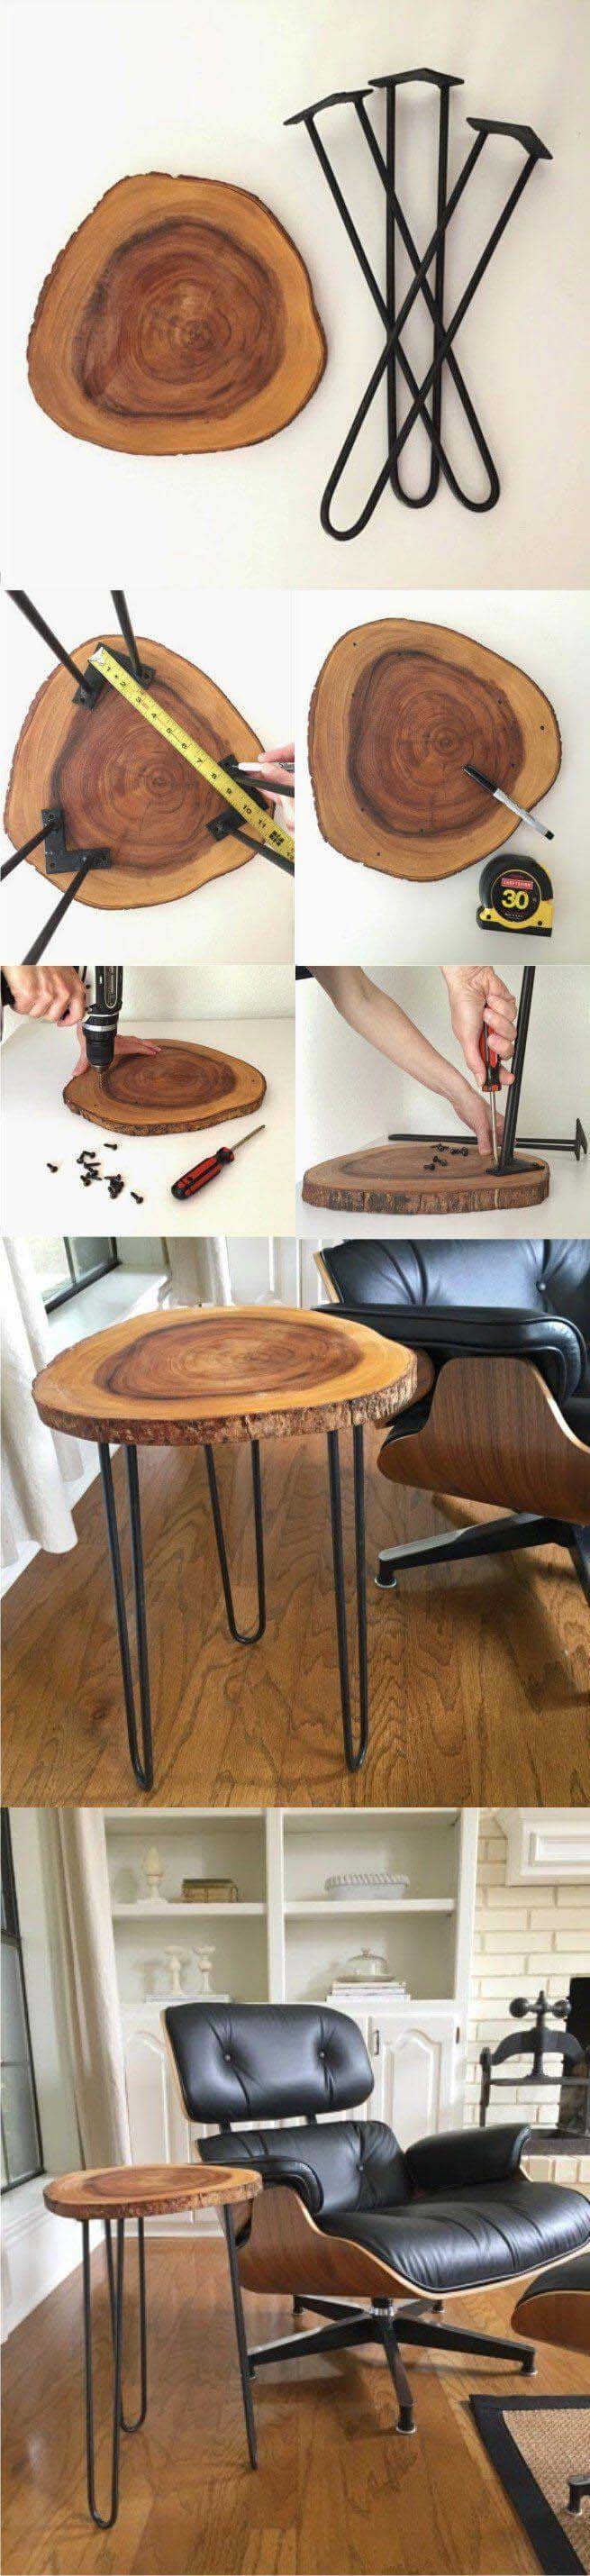 Mid-Century Modern Hairpin Table #diy #wood #crafts #decorhomeideas